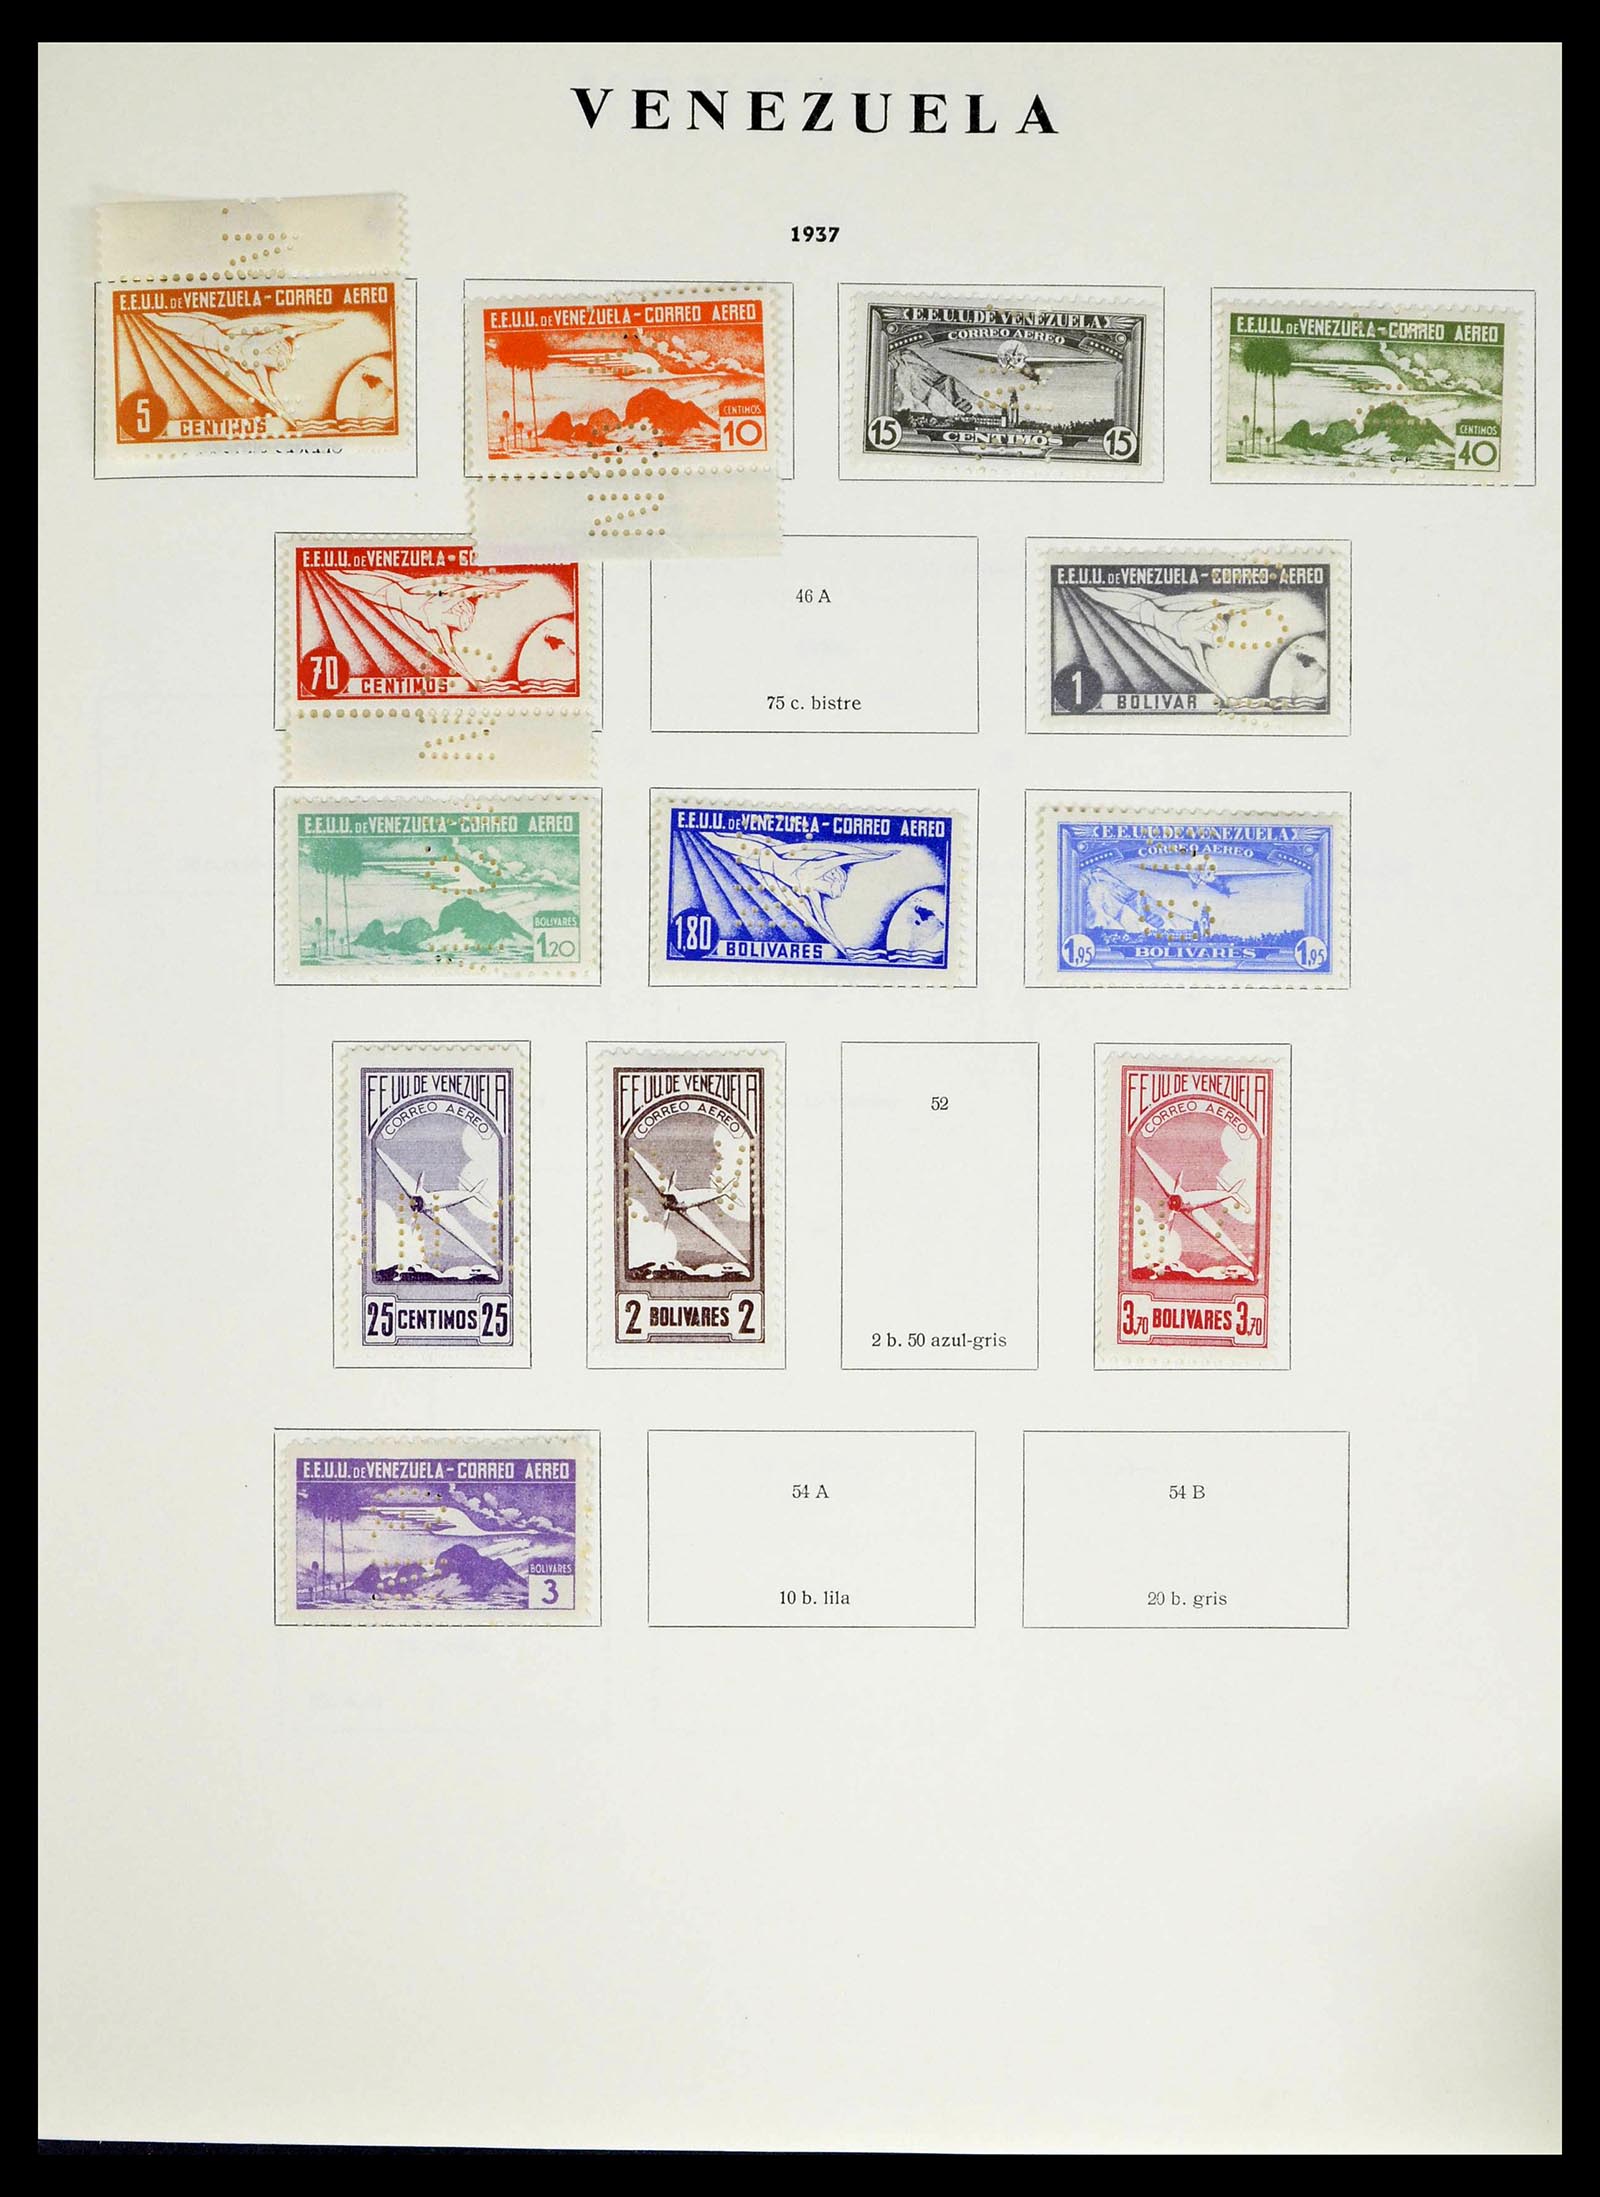 39223 0204 - Stamp collection 39223 Venezuela 1859-1984.